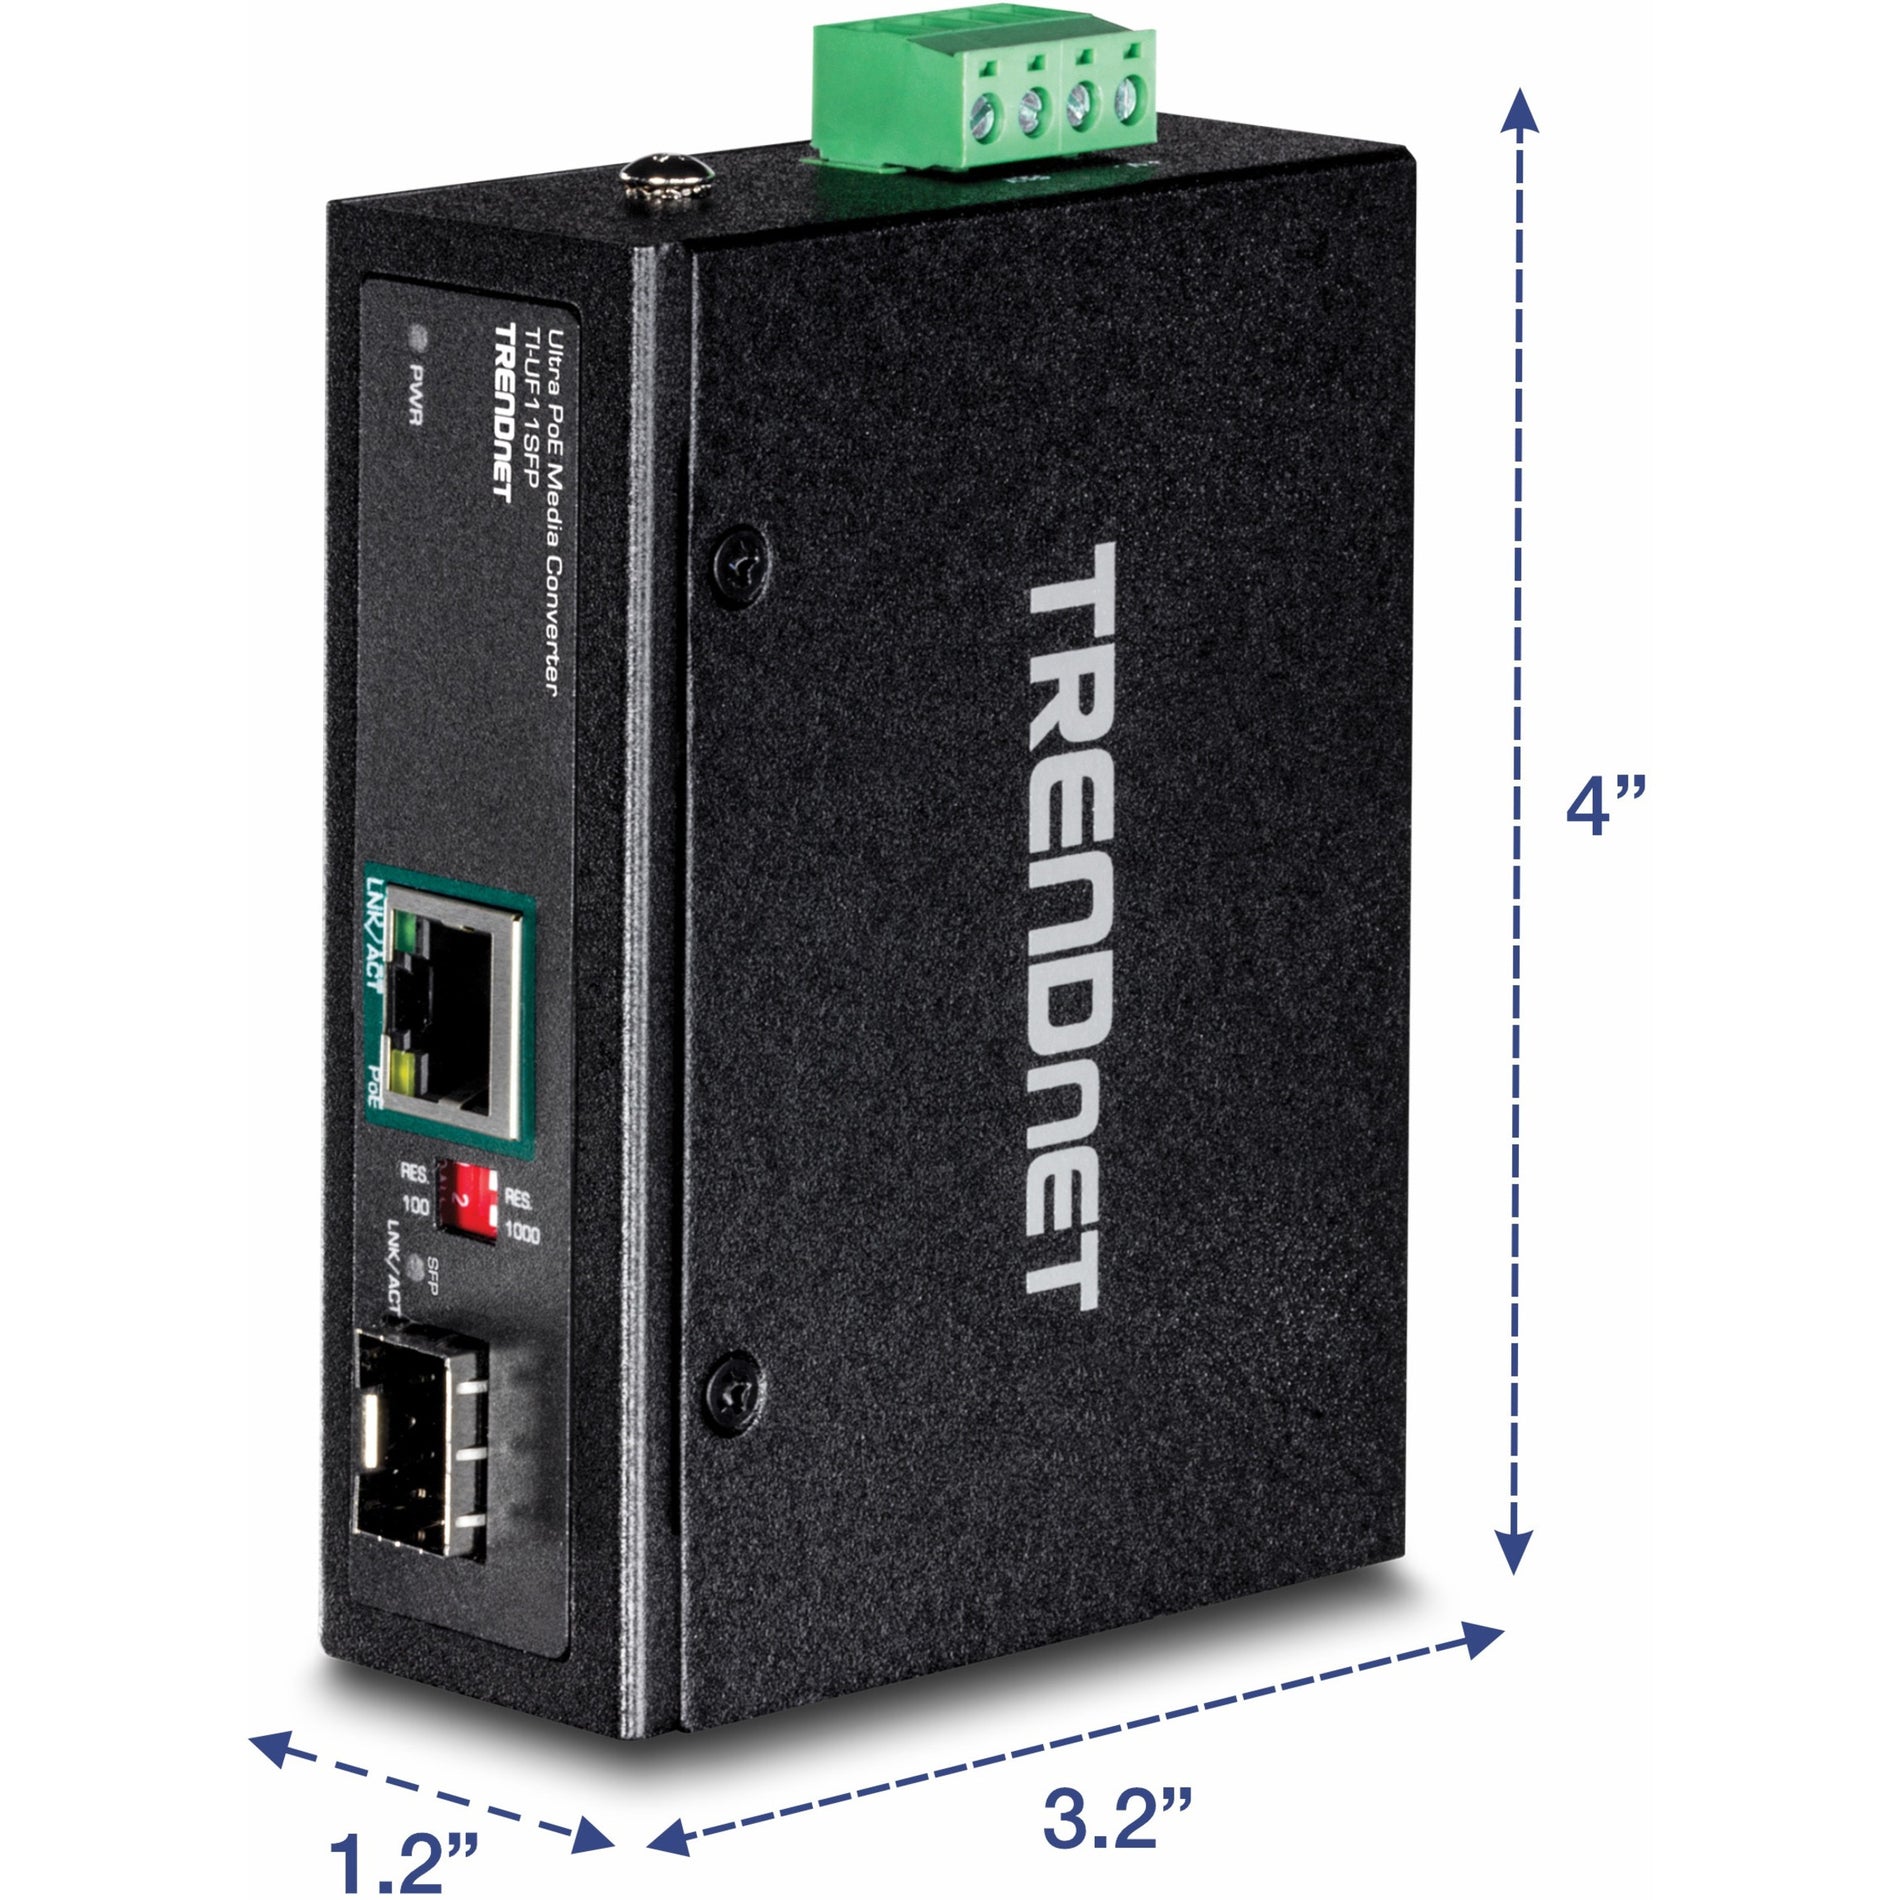 TRENDnet TI-UF11SFP Hardened Industrial SFP to Gigabit UPoE Media Converter